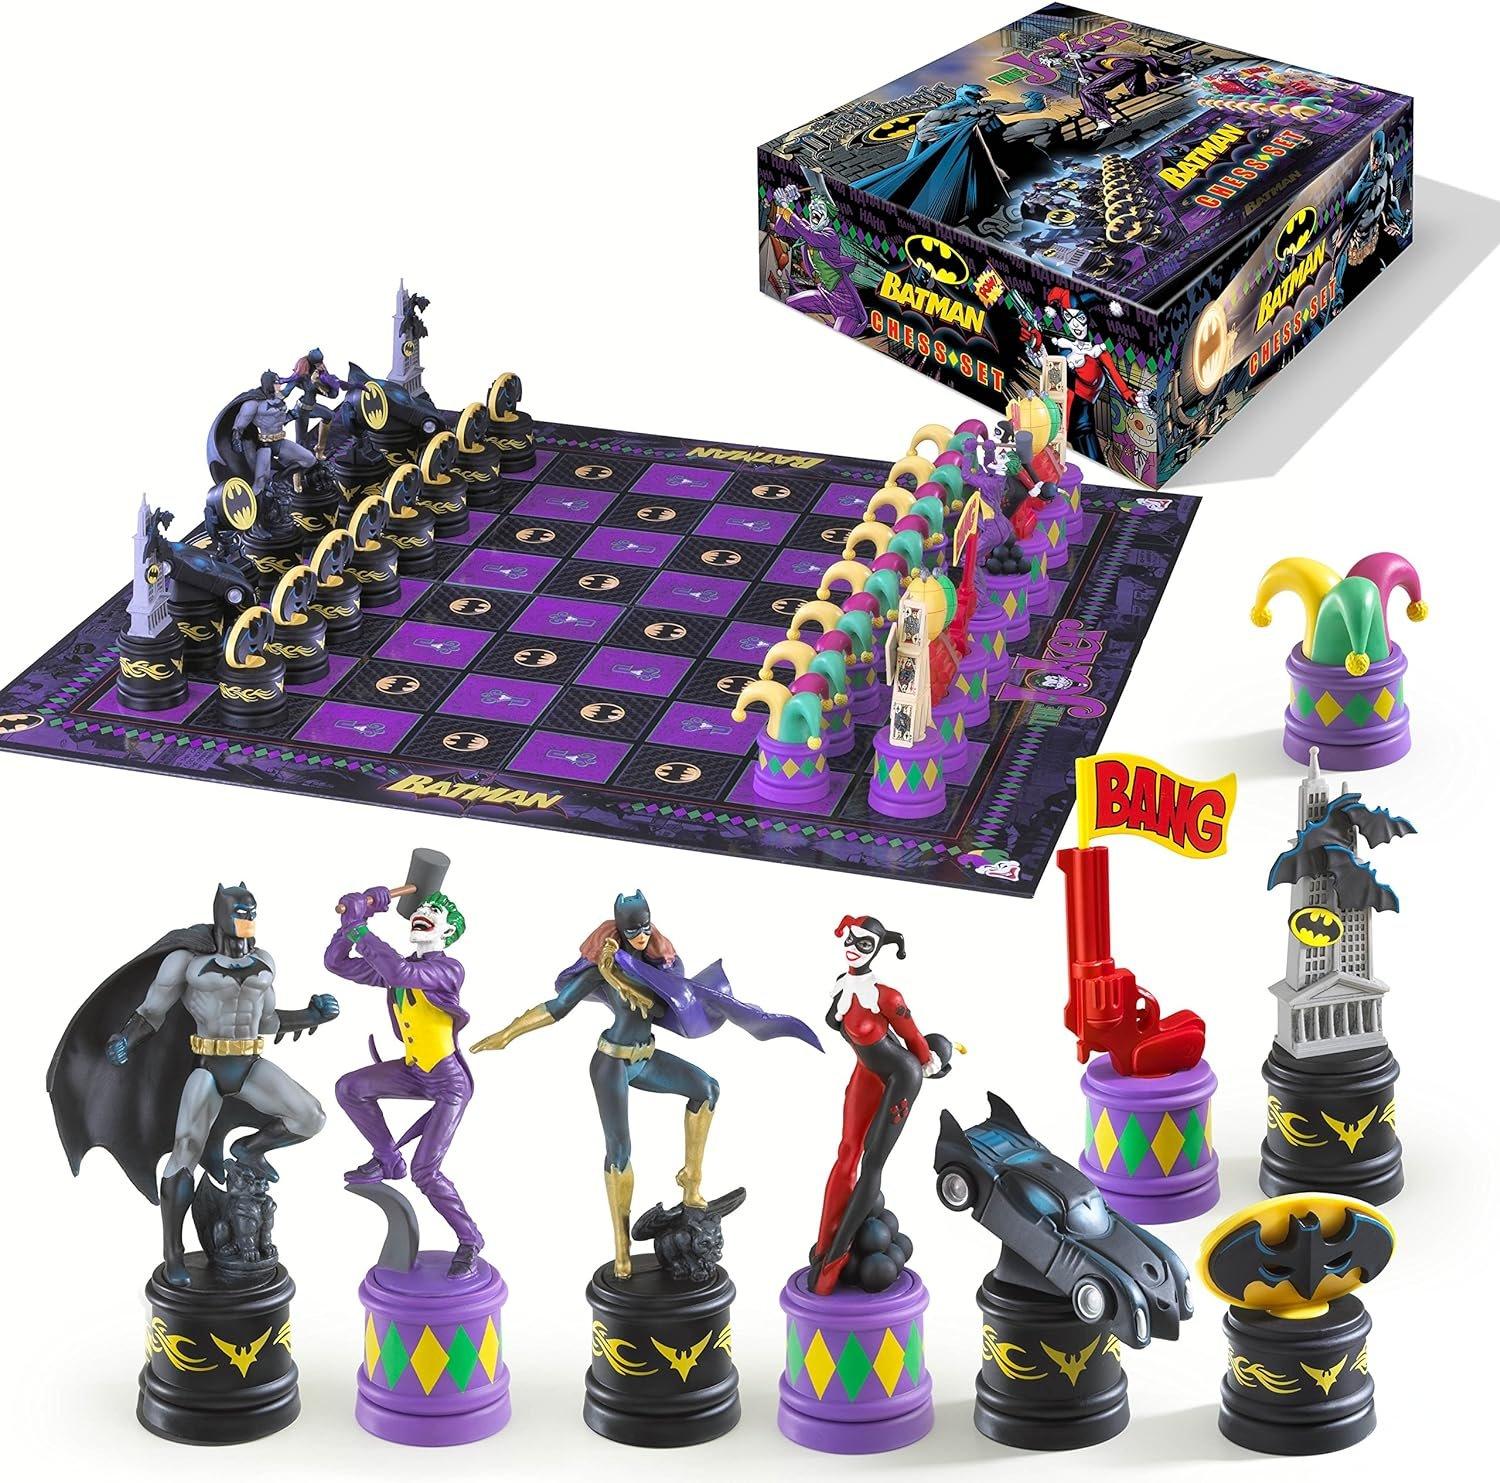 Batman The Dark Knight vs The Joker Chess Set